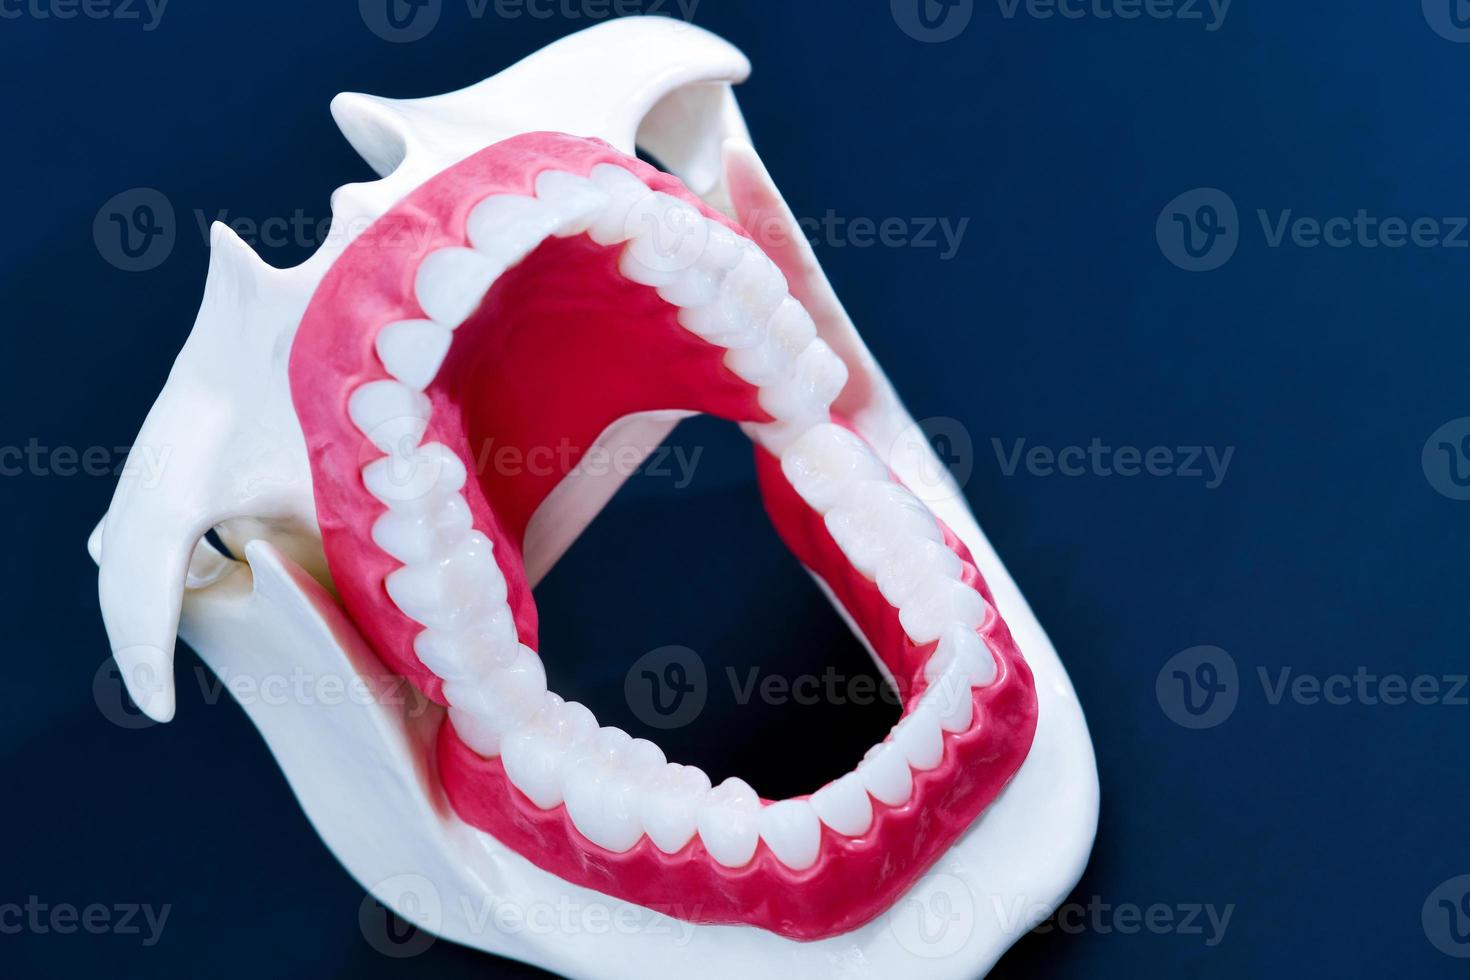 Dentist orthodontic teeth model photo